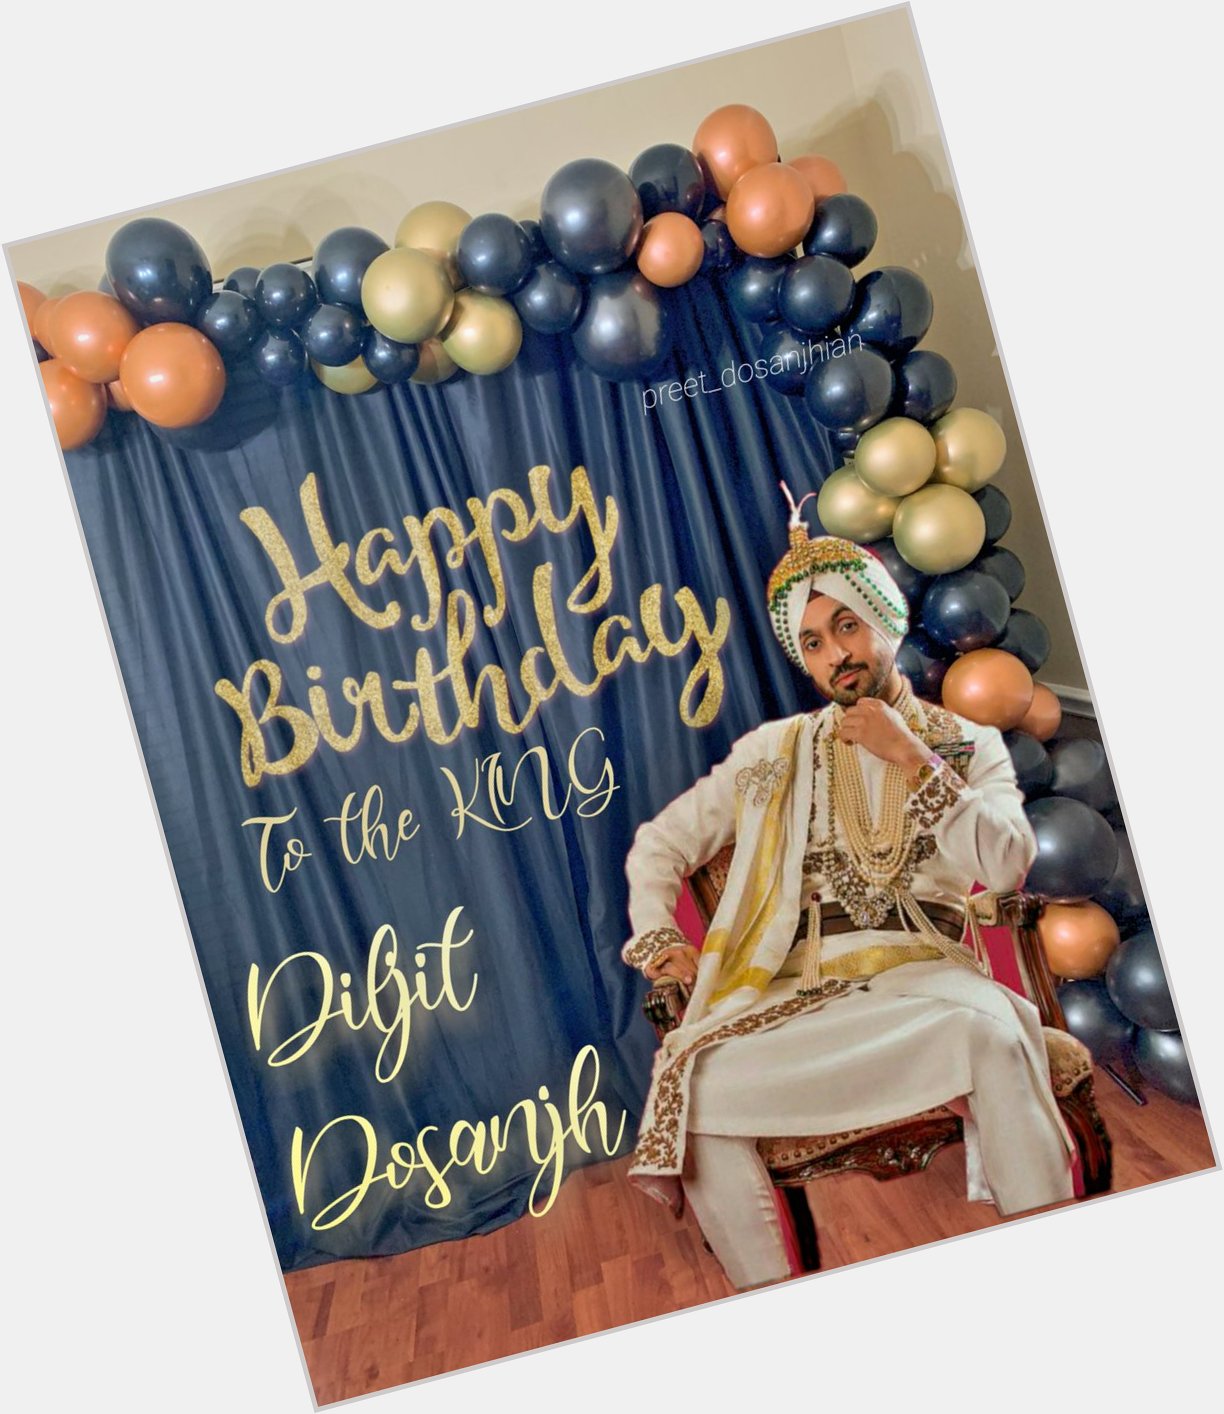 Happy Birthday To The King Diljit Dosanjh   